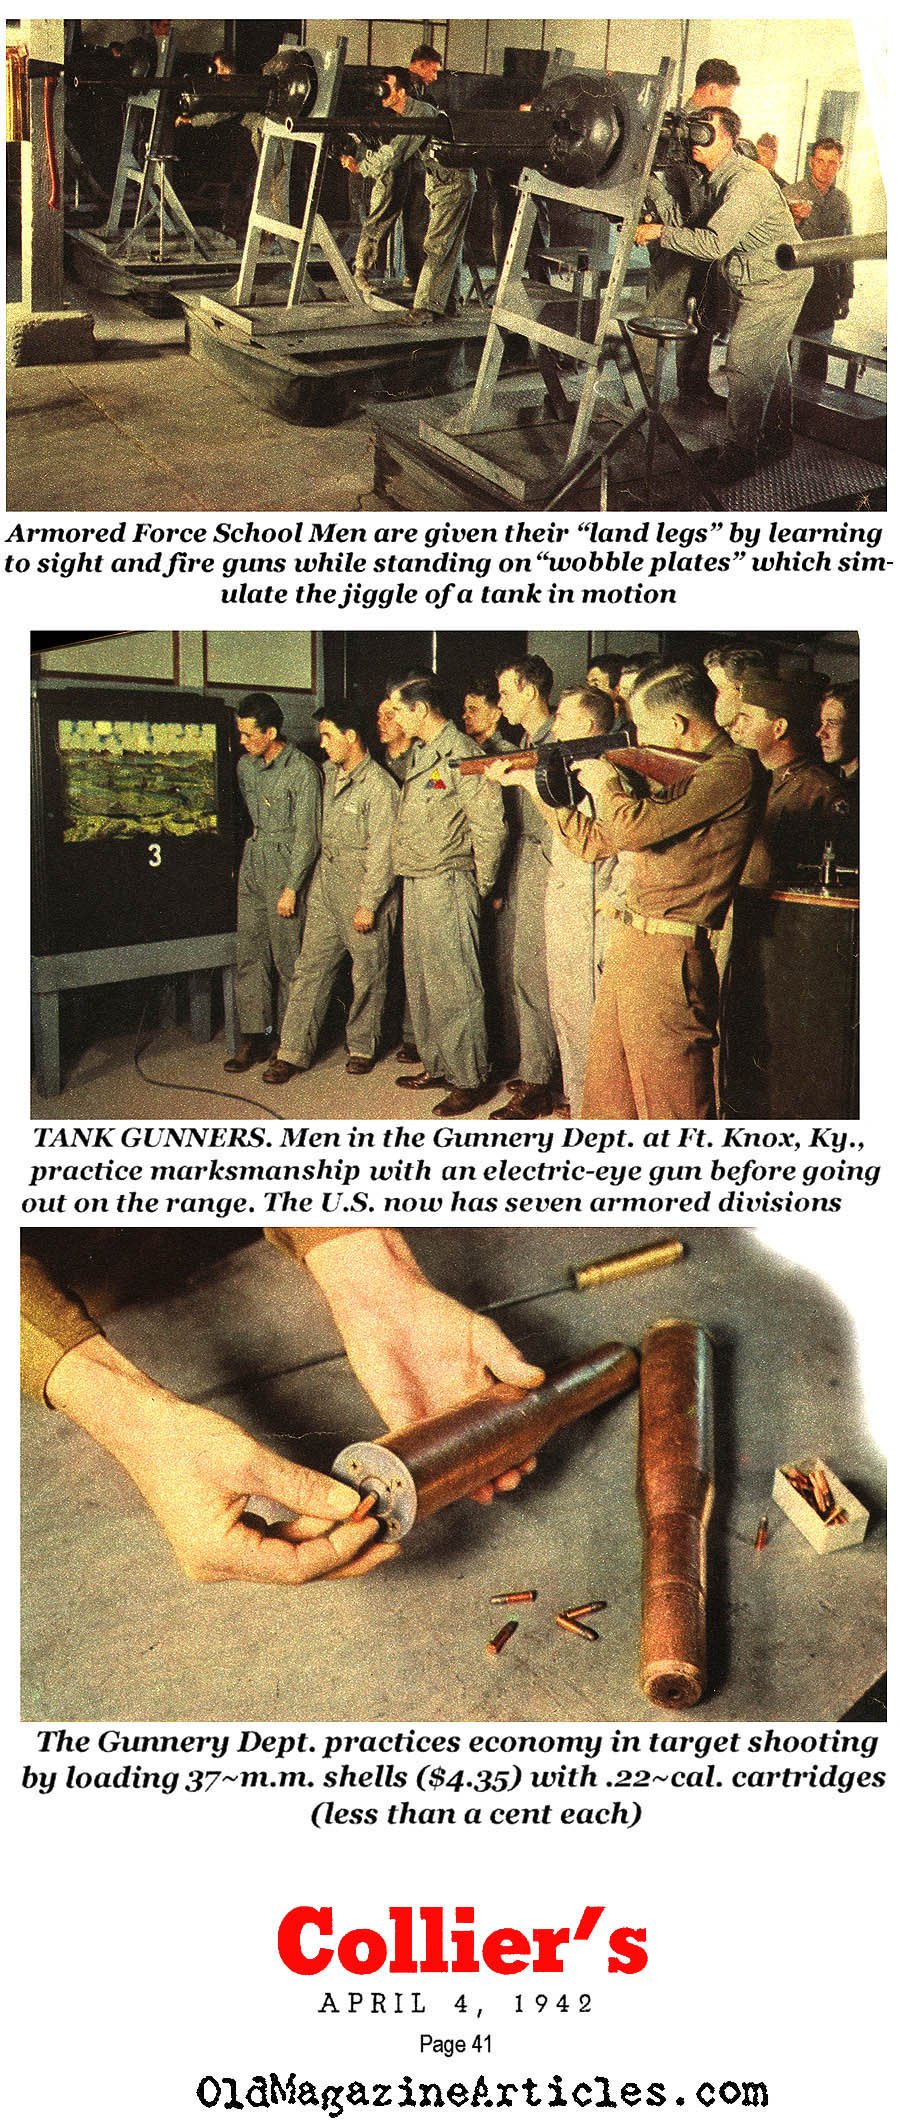 The Training of Tank Crews (Collier's Magazine, 1942)